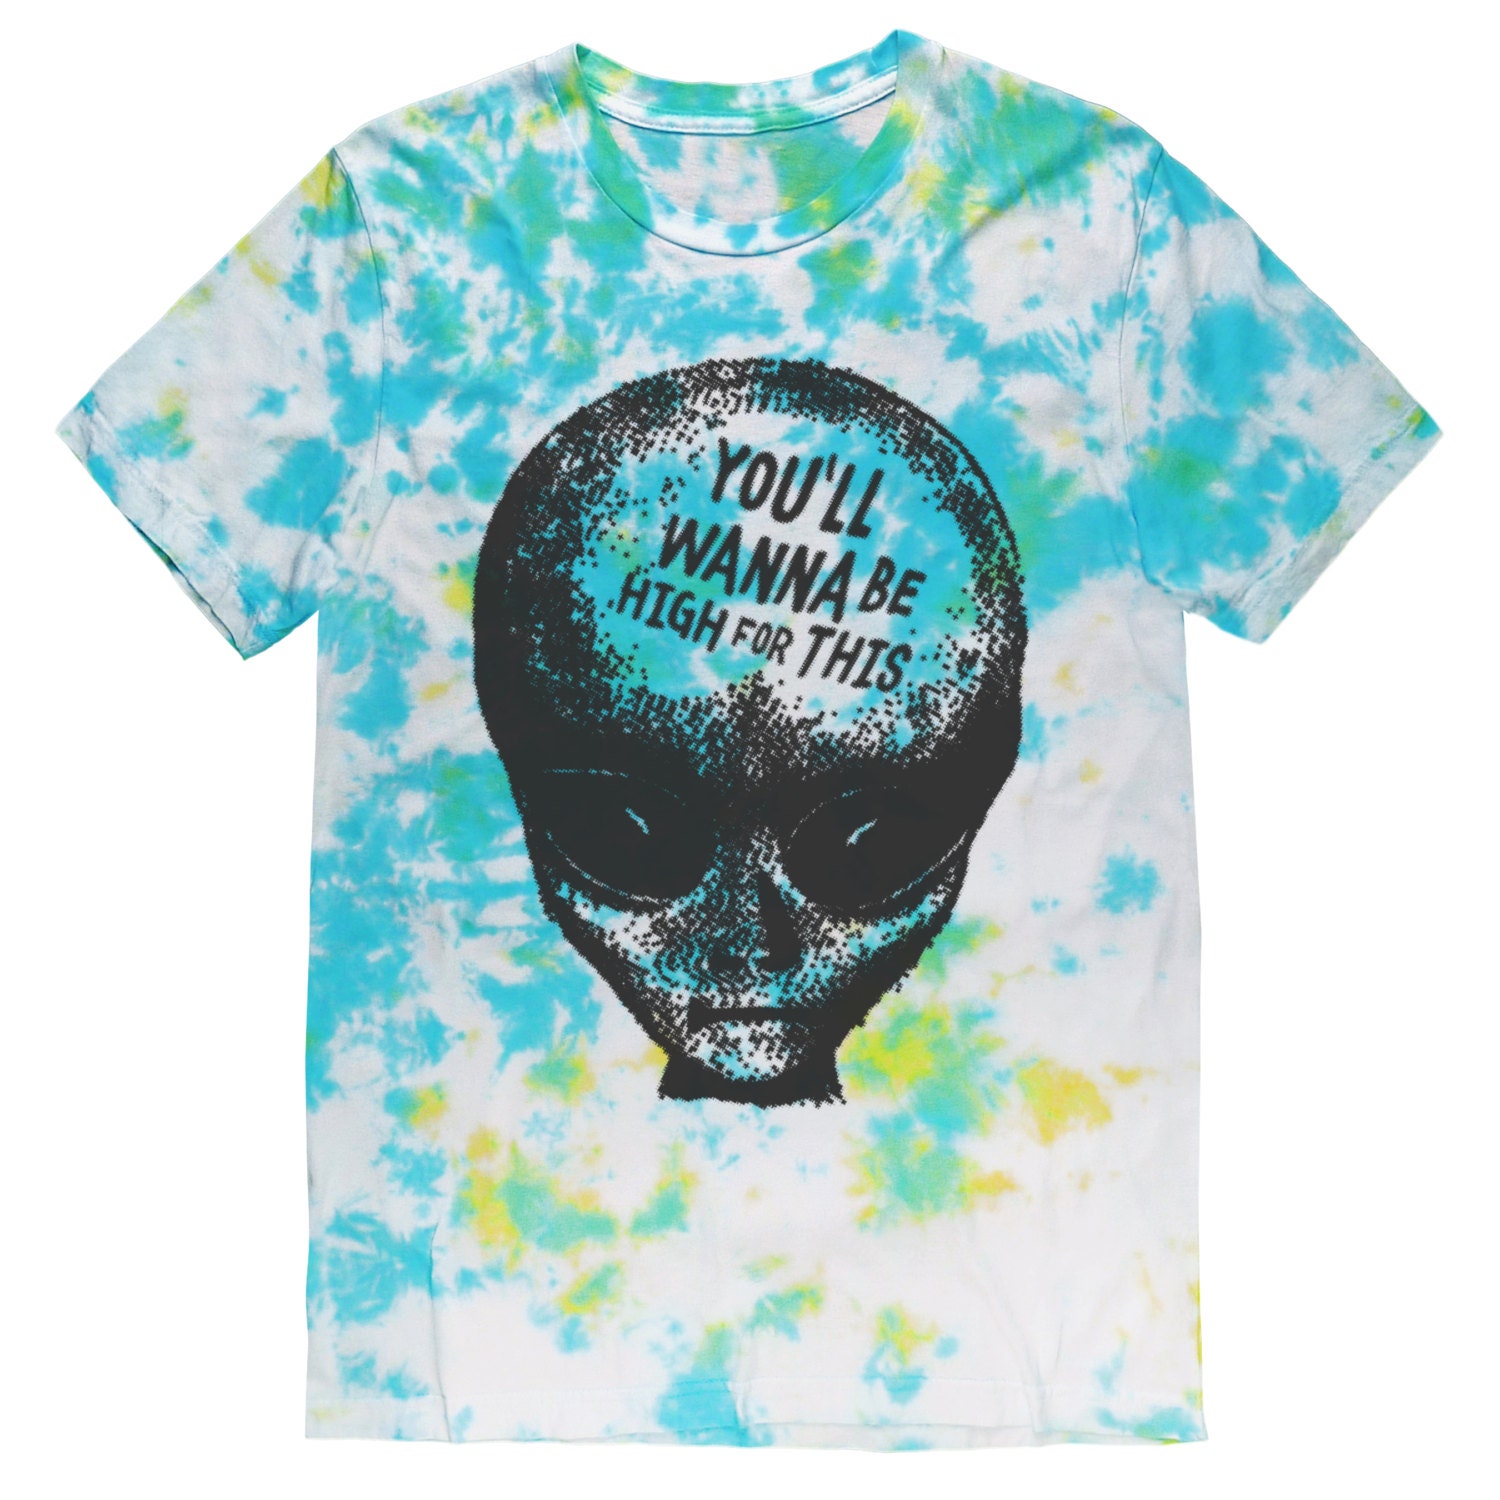 Tye Dye Alien Tshirt You'll Wanna Be High For by PsychicTrashShop